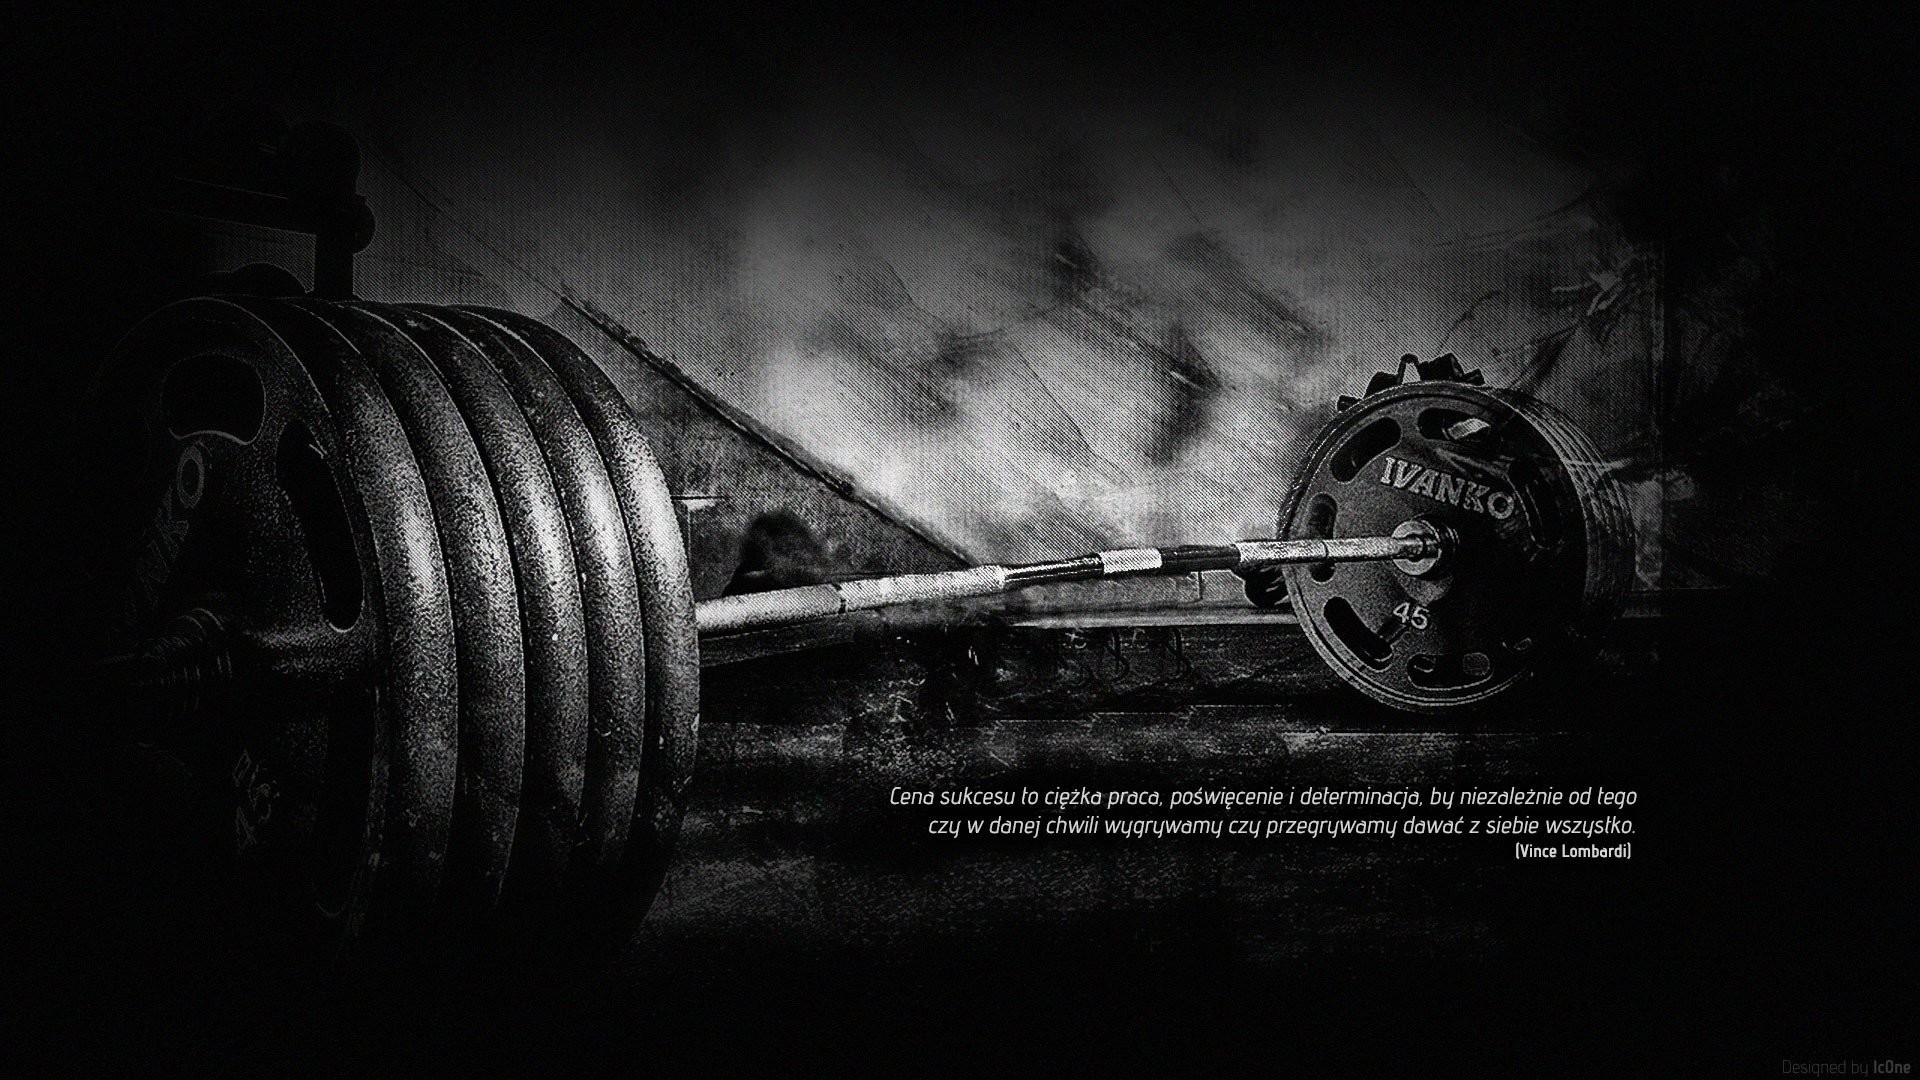 1920x1080 gym fitness motivation tapeta lc0ne siAOaeuownia wallpaper background  